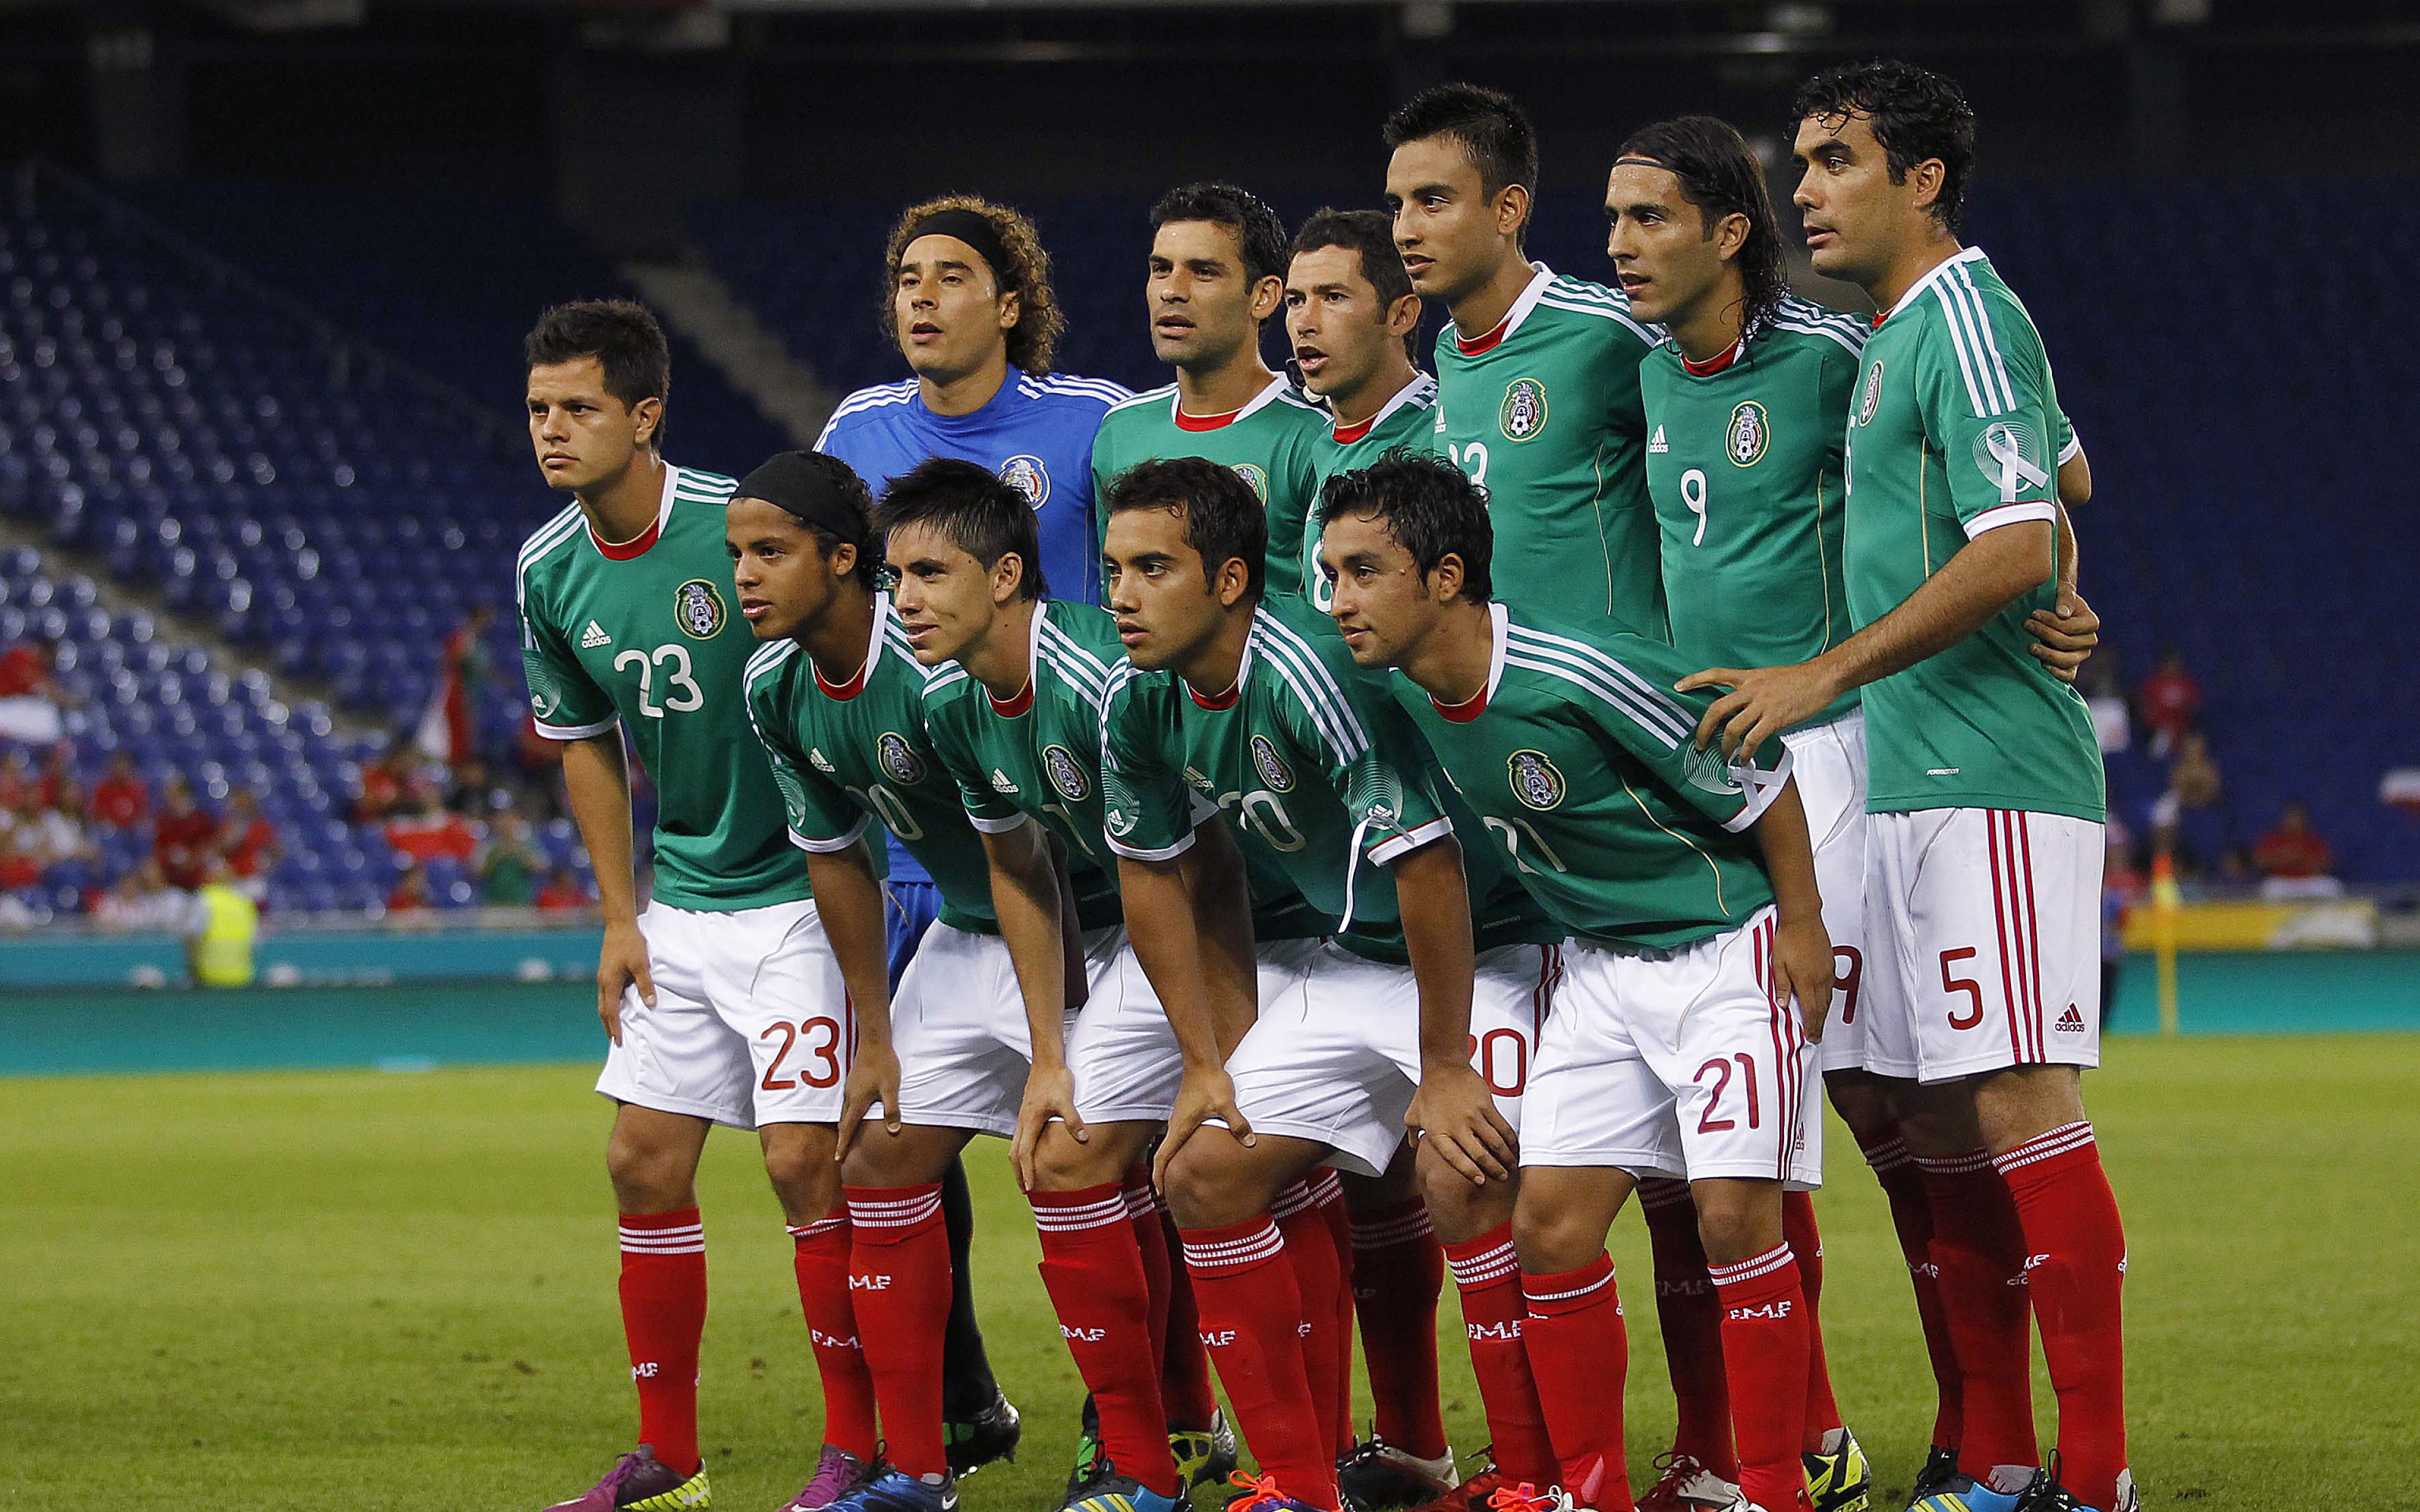 Download Wallpaper 3840x2400 Mexico vs chile, Football, 2015 ...